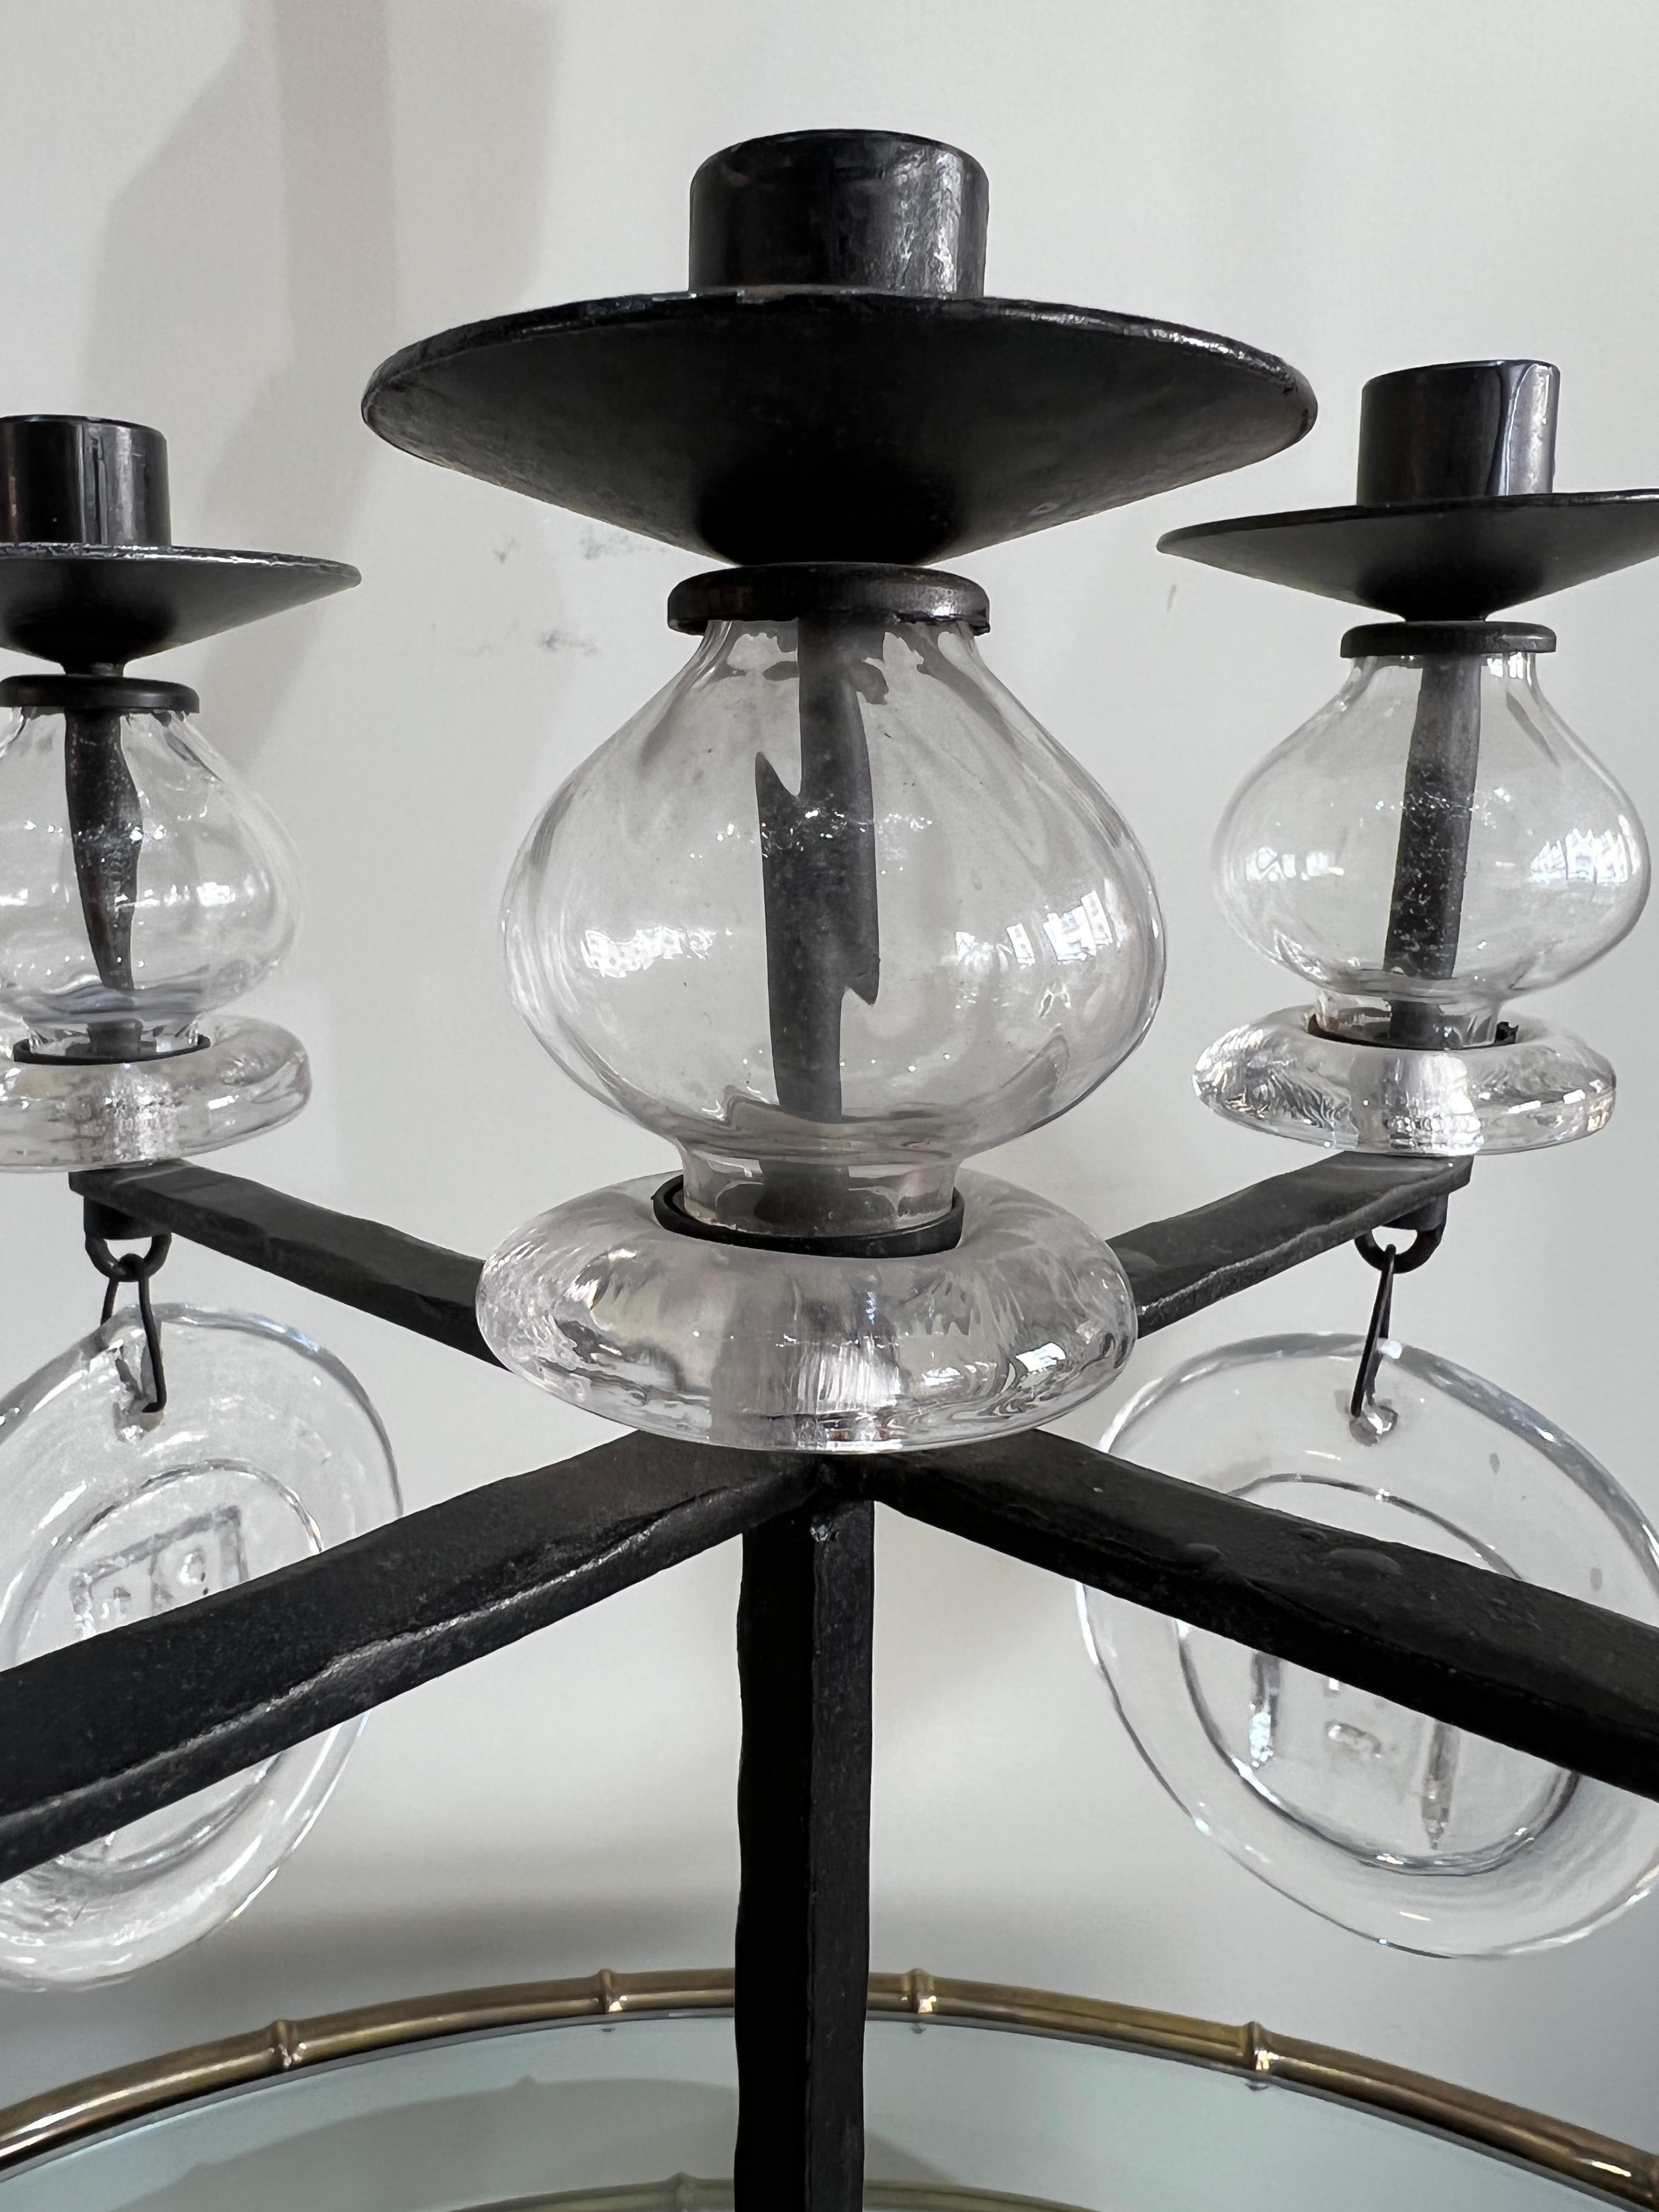 A wrought iron candelholder five lights by Erik Hoglund Sweden, circa 1970
Very large glass pendants.